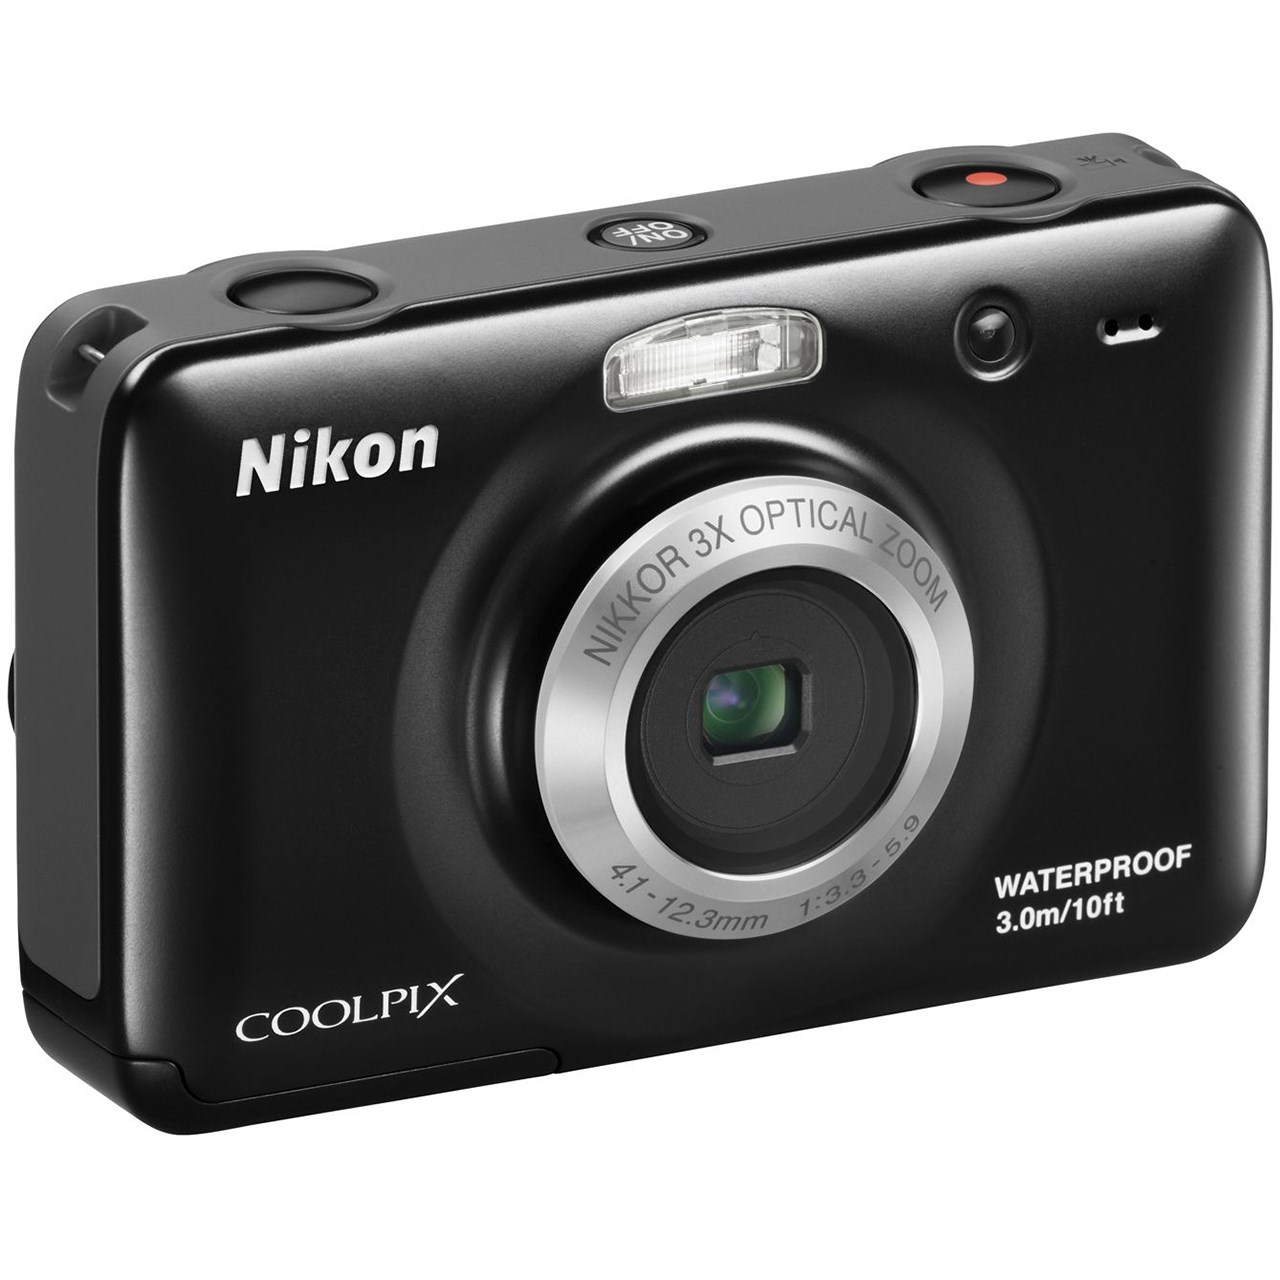 دوربين ديجيتال نيکون کولپيکس Nikon Coolpix S30  